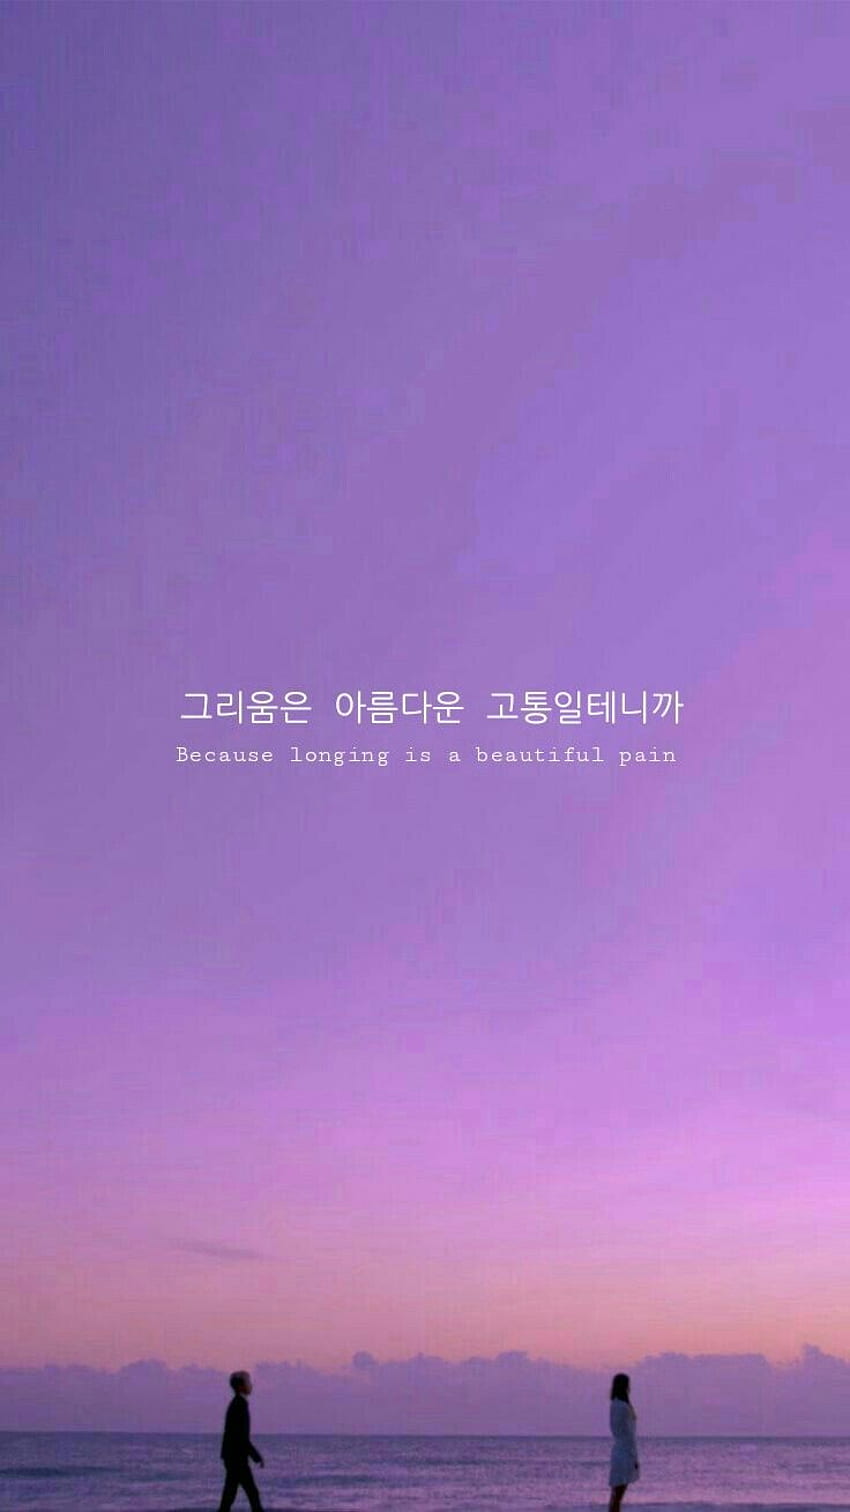 kutipan korea , langit, ungu, ungu, horison, berwarna merah muda, siang hari, teks, fenomena atmosfer, awan, suasana, Sad Kpop Quotes wallpaper ponsel HD